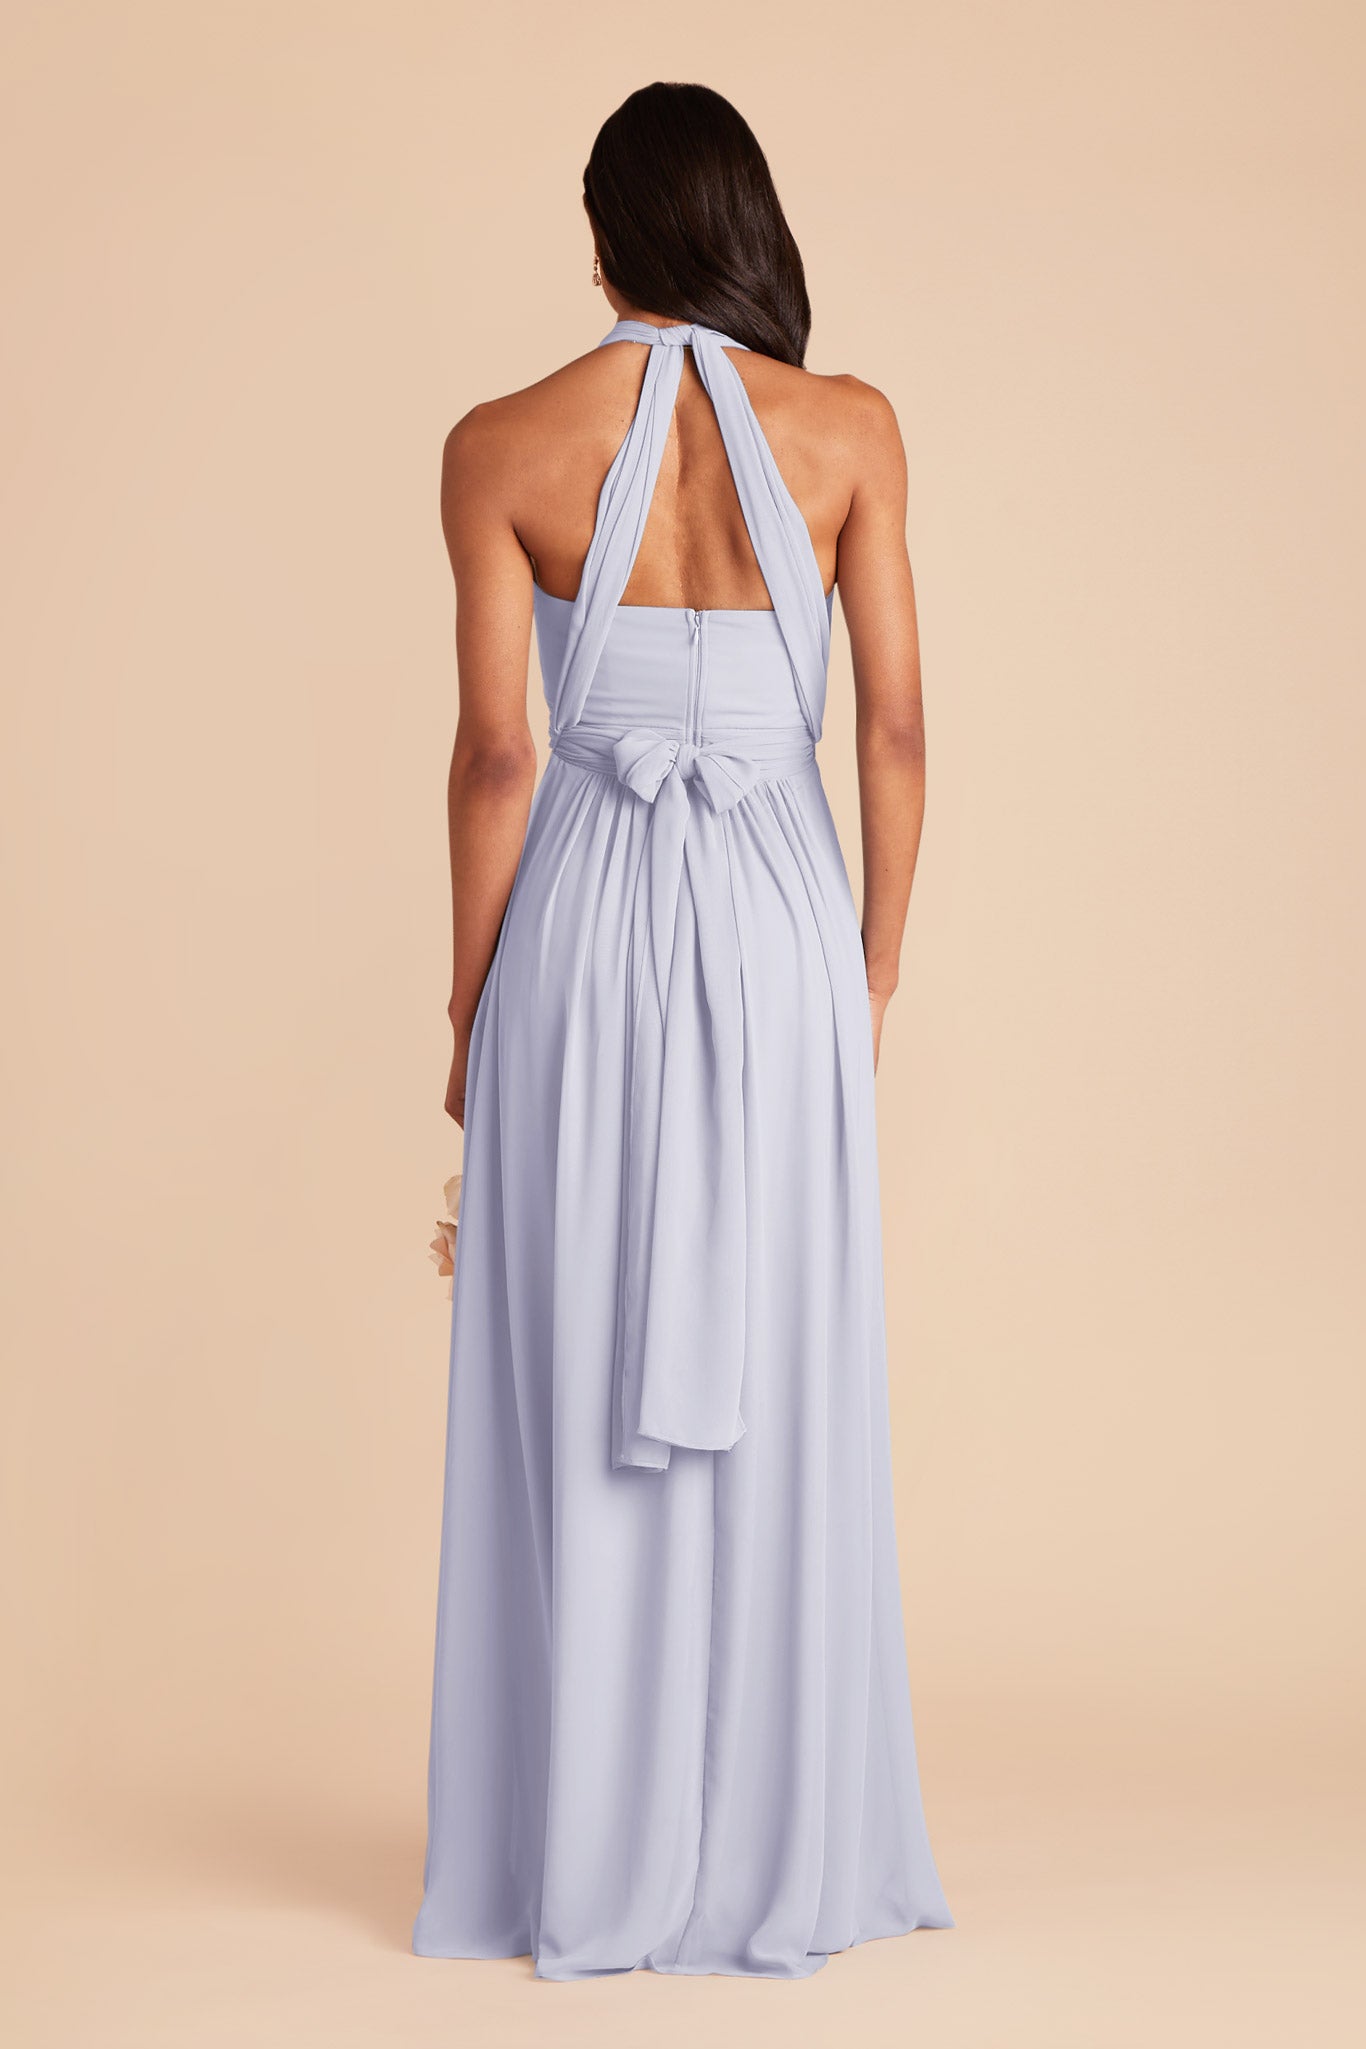 Periwinkle Blue Grace Convertible Dress by Birdy Grey